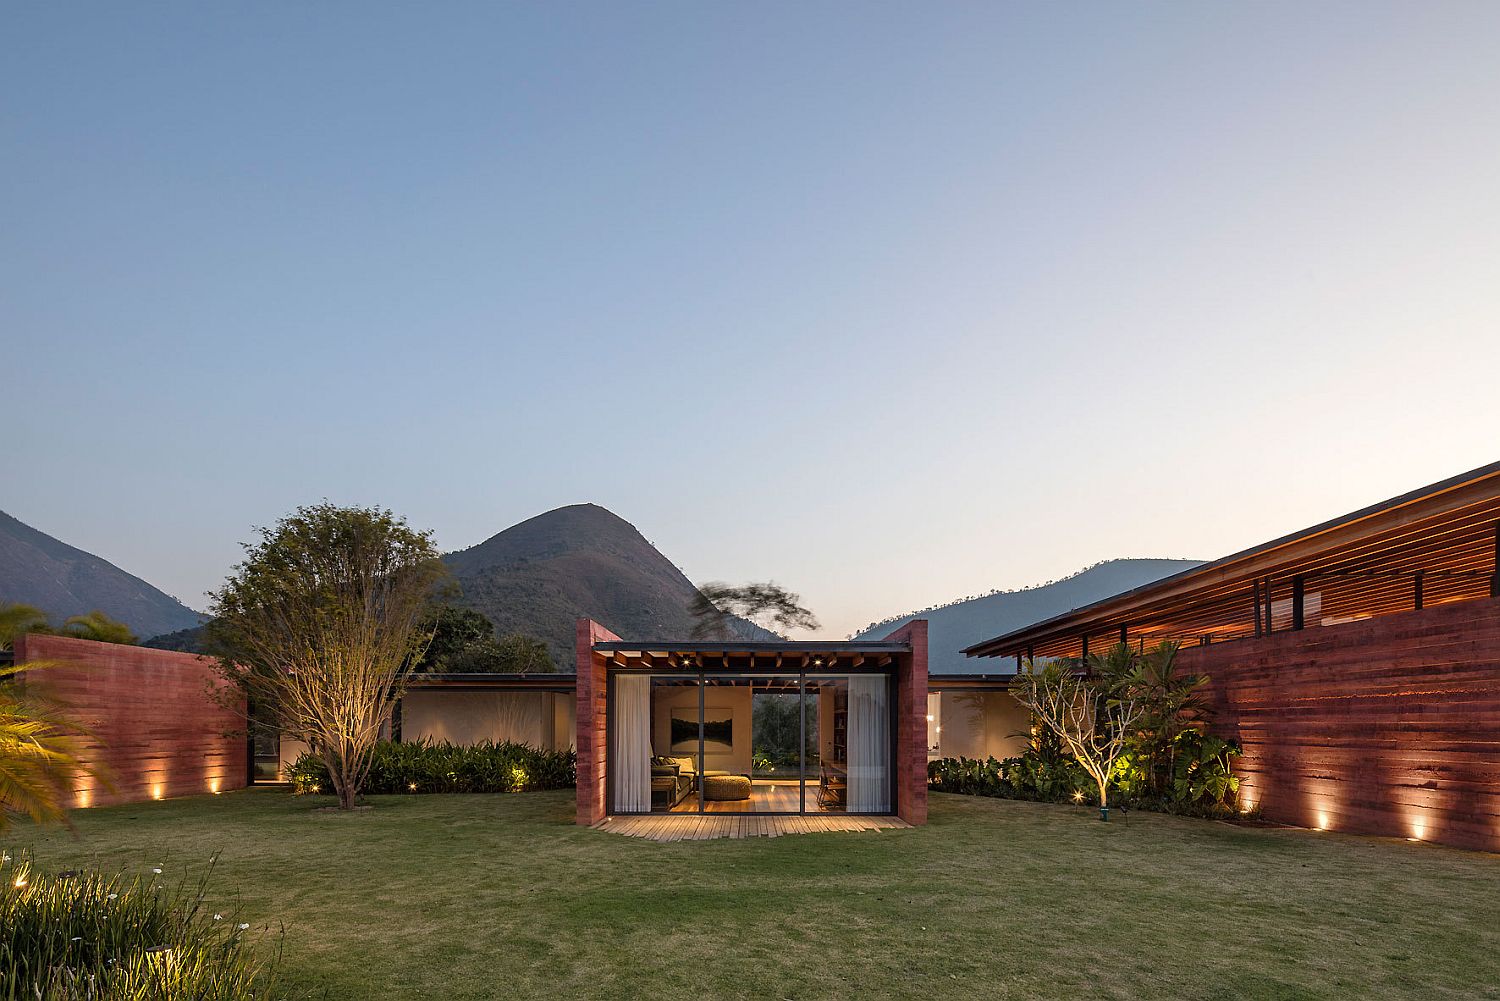 Smart lighting and modern garden around the contemporary Brazilian home